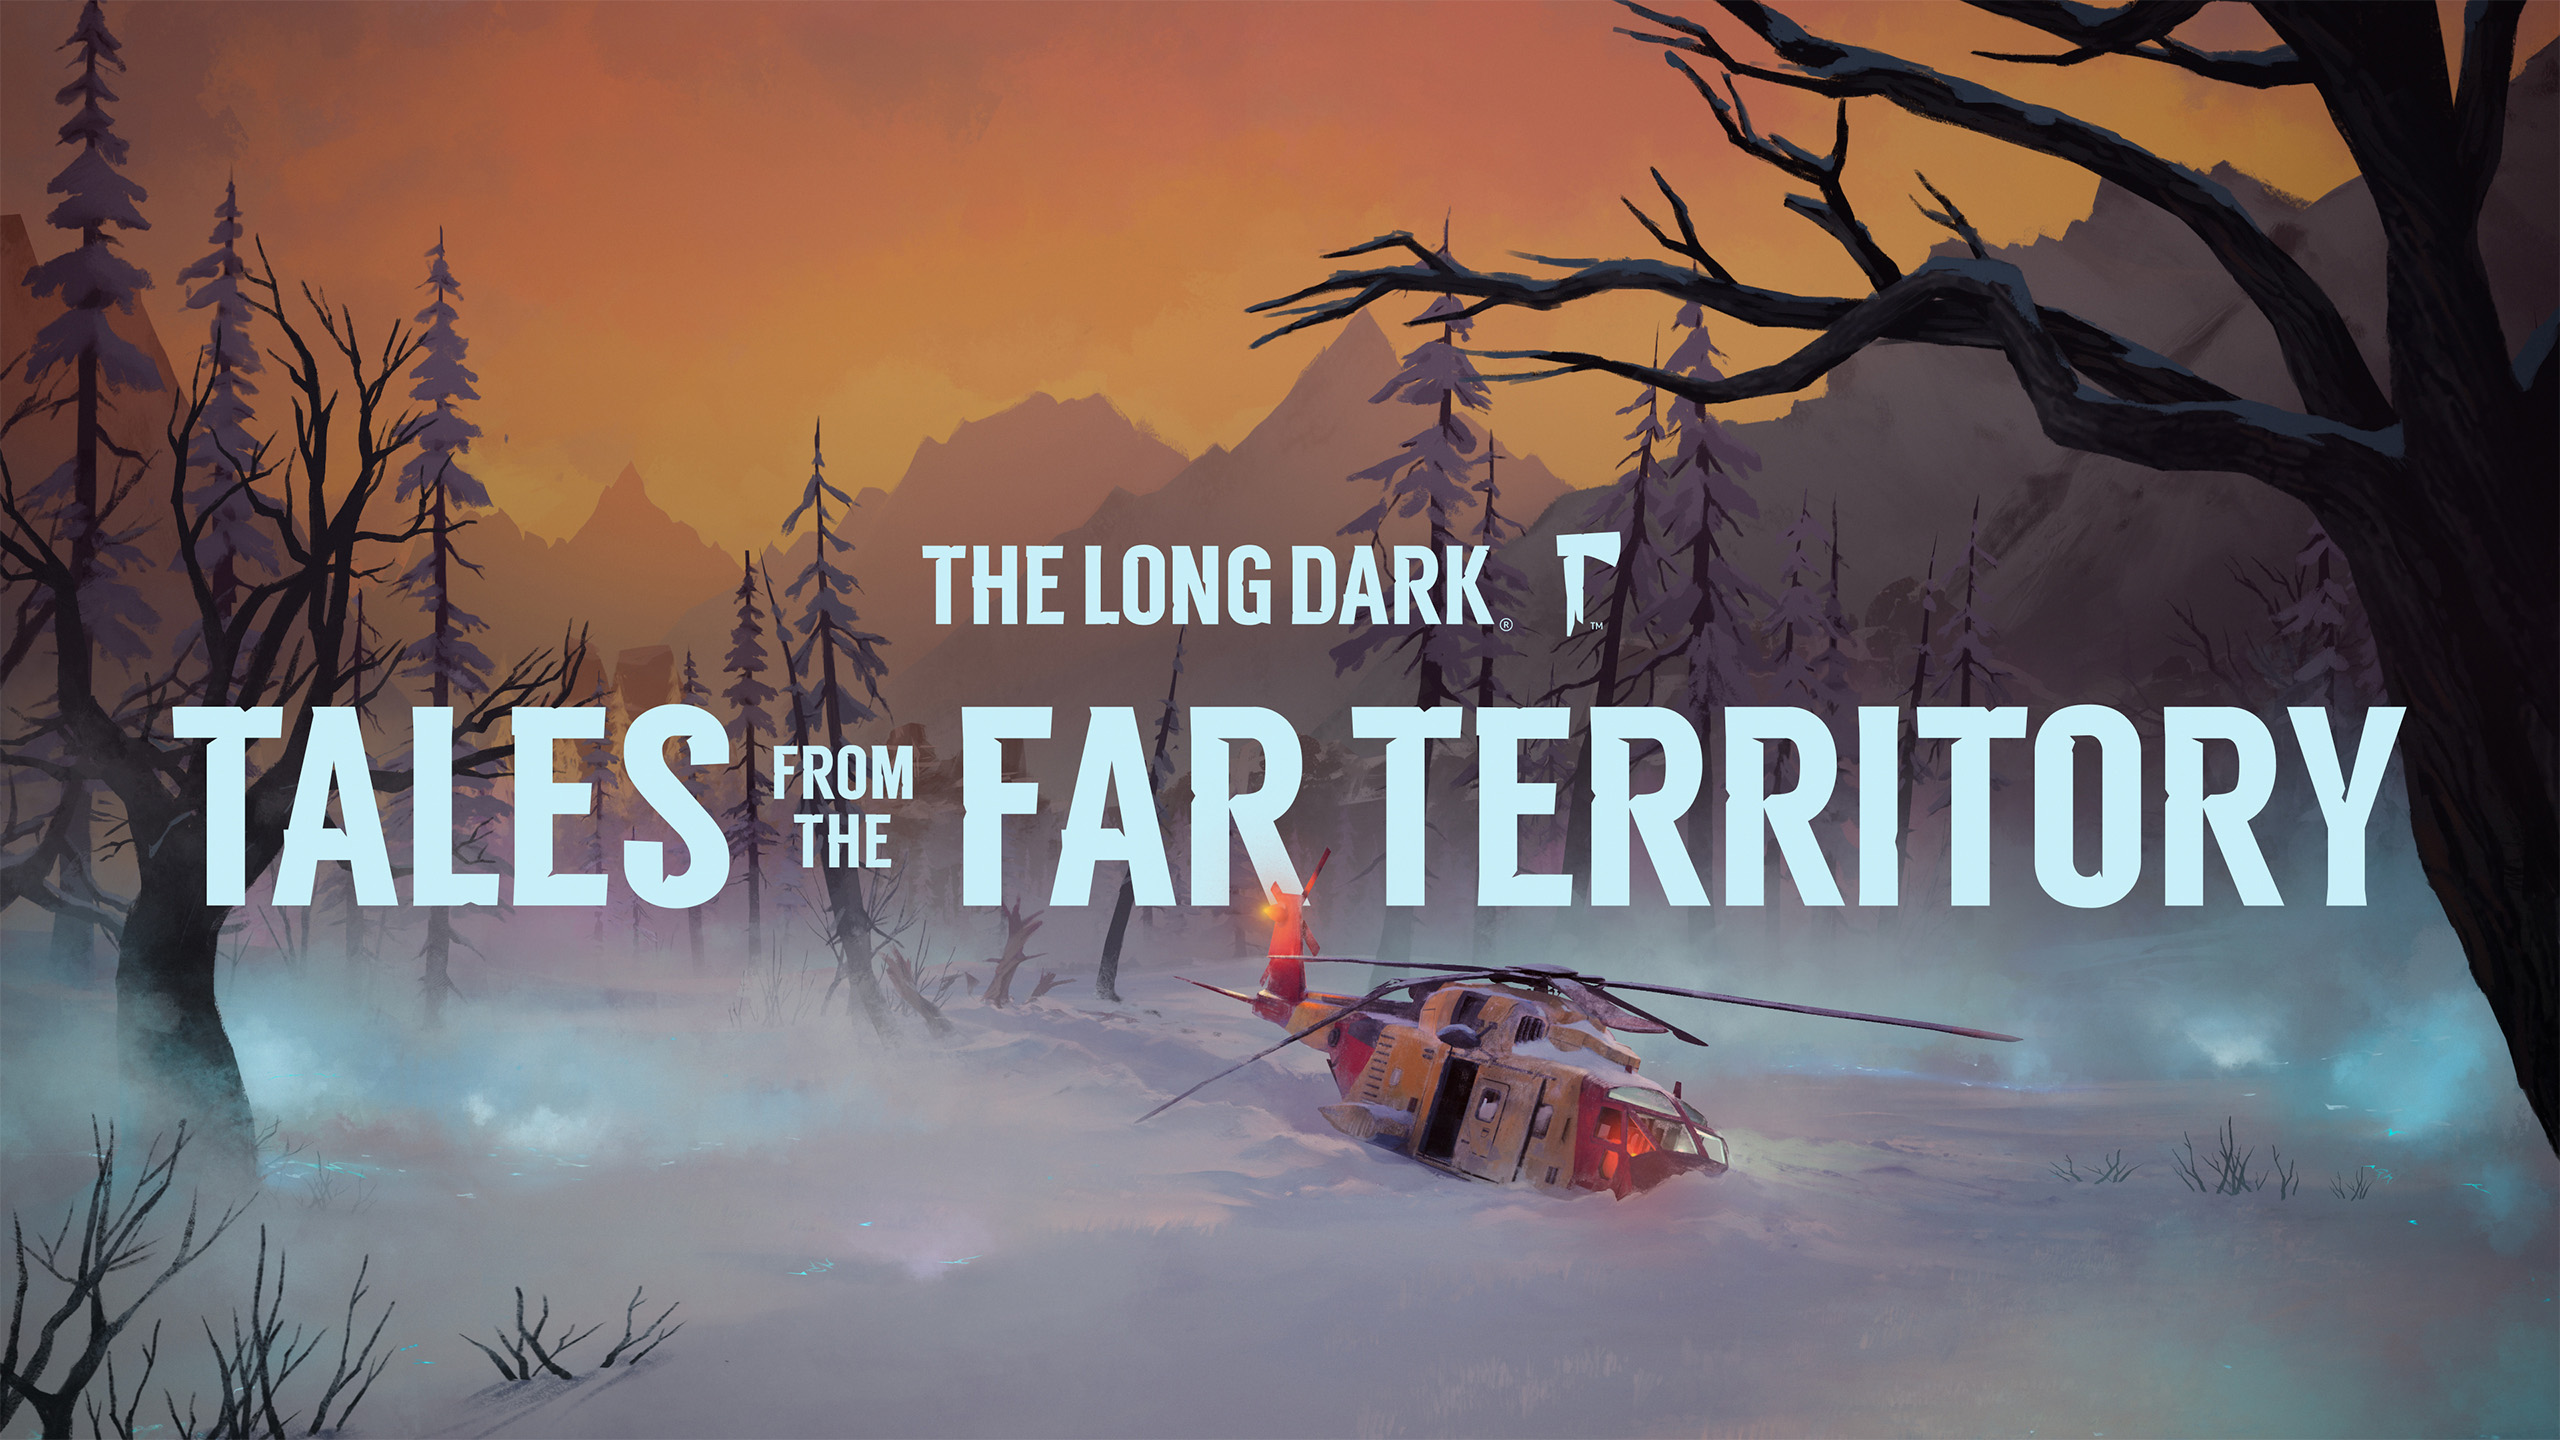 Dark far. The long Dark 1 эпизод. The long Dark 5 эпизод. The long Dark Tales from the far Territory карта. The long Dark шапка.